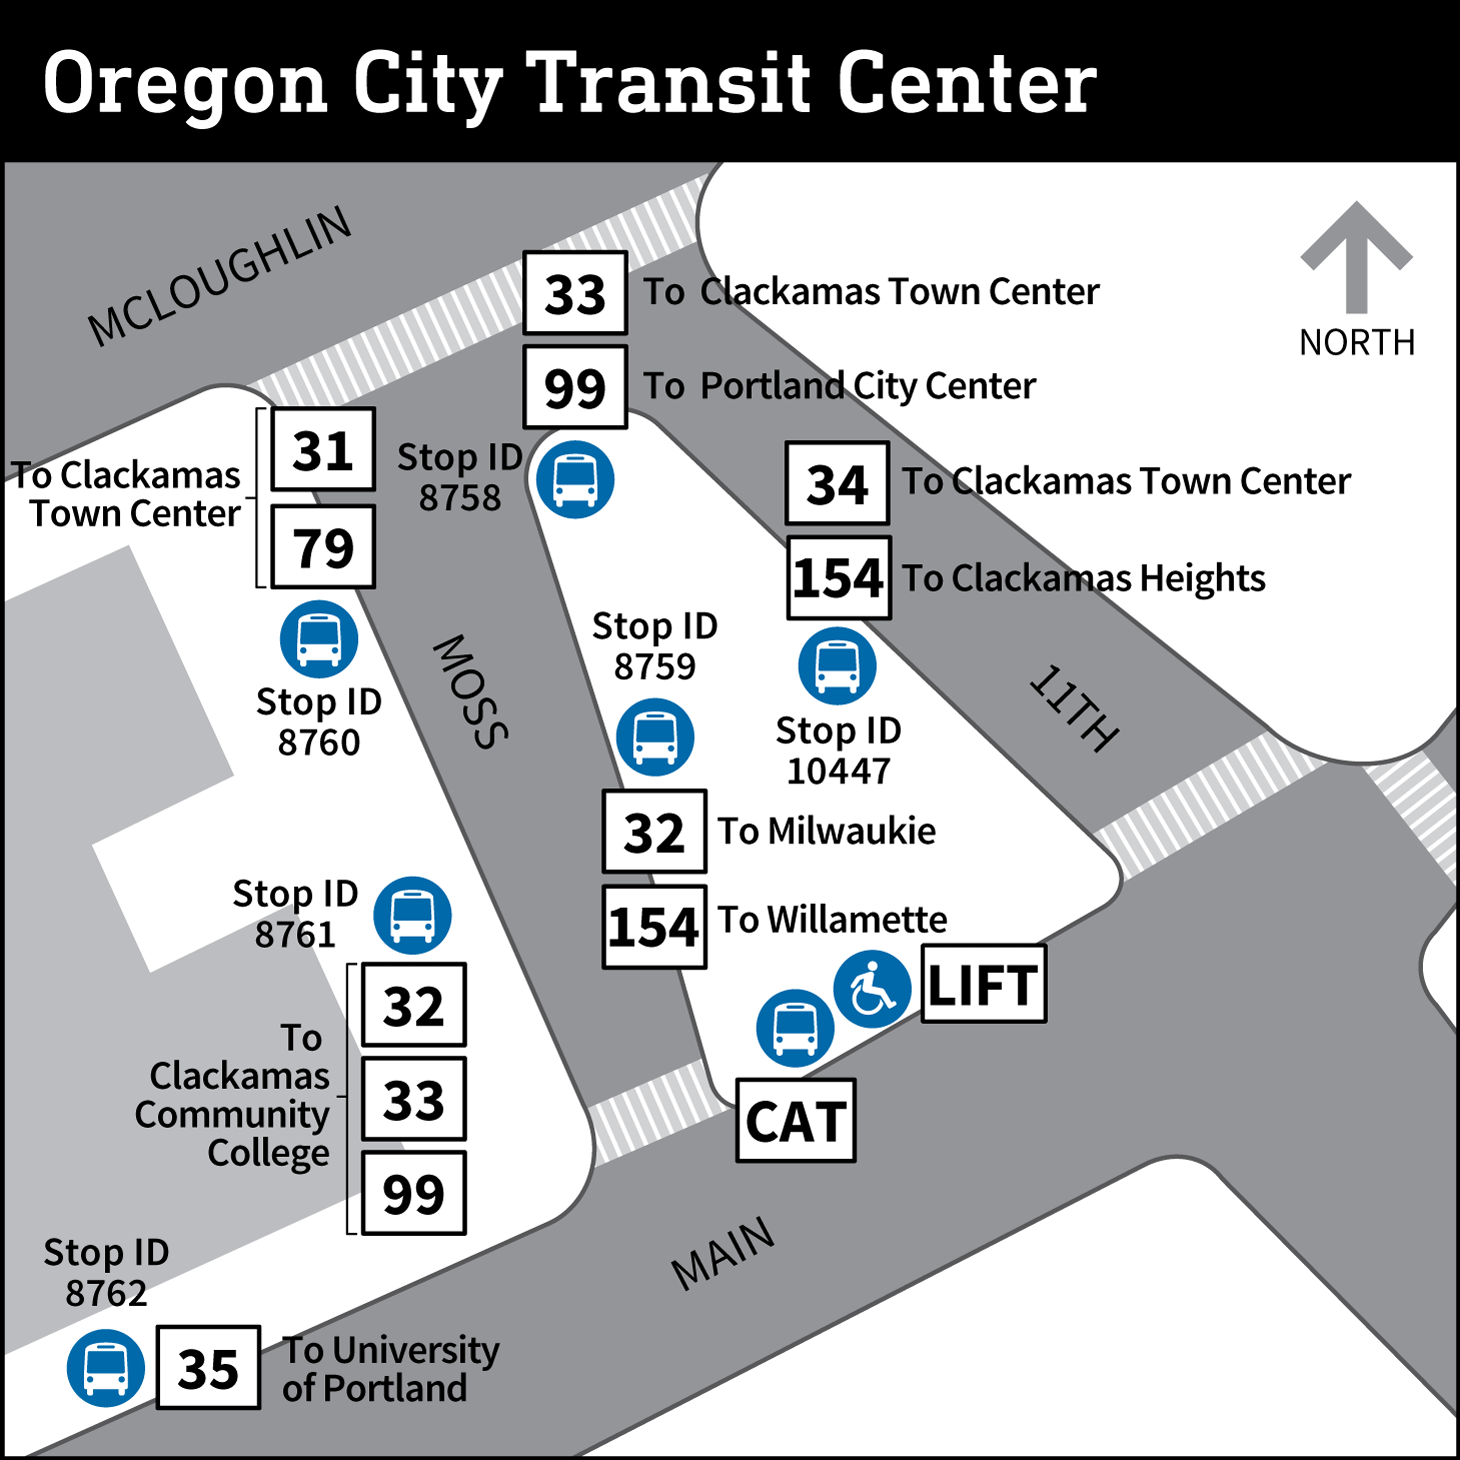 Oregon City Transit Center